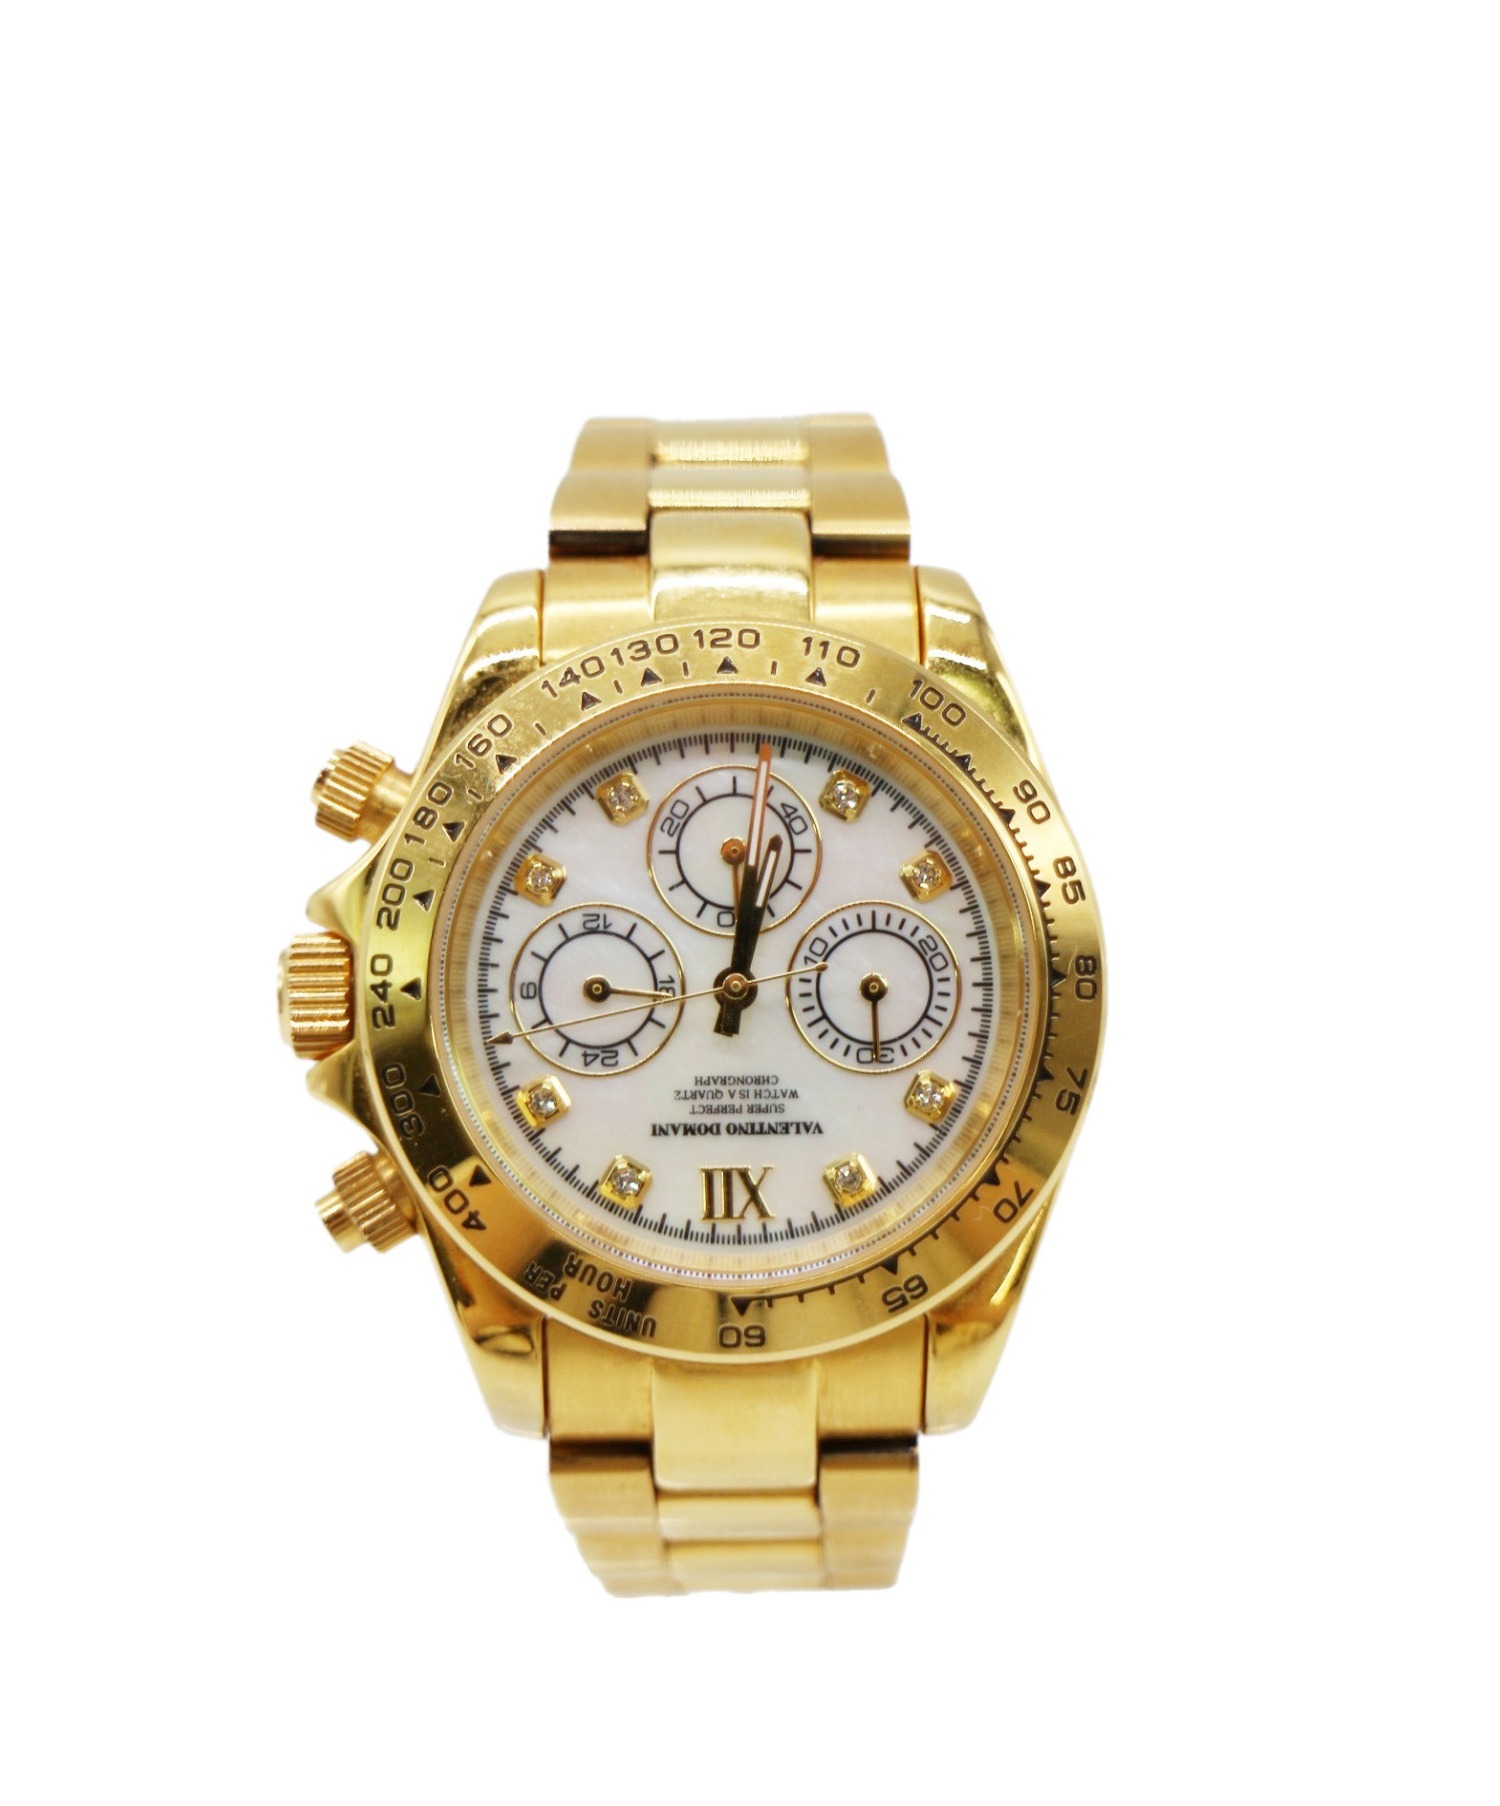 VALENTINO DOMANI の金腕時計 メンズ - 時計